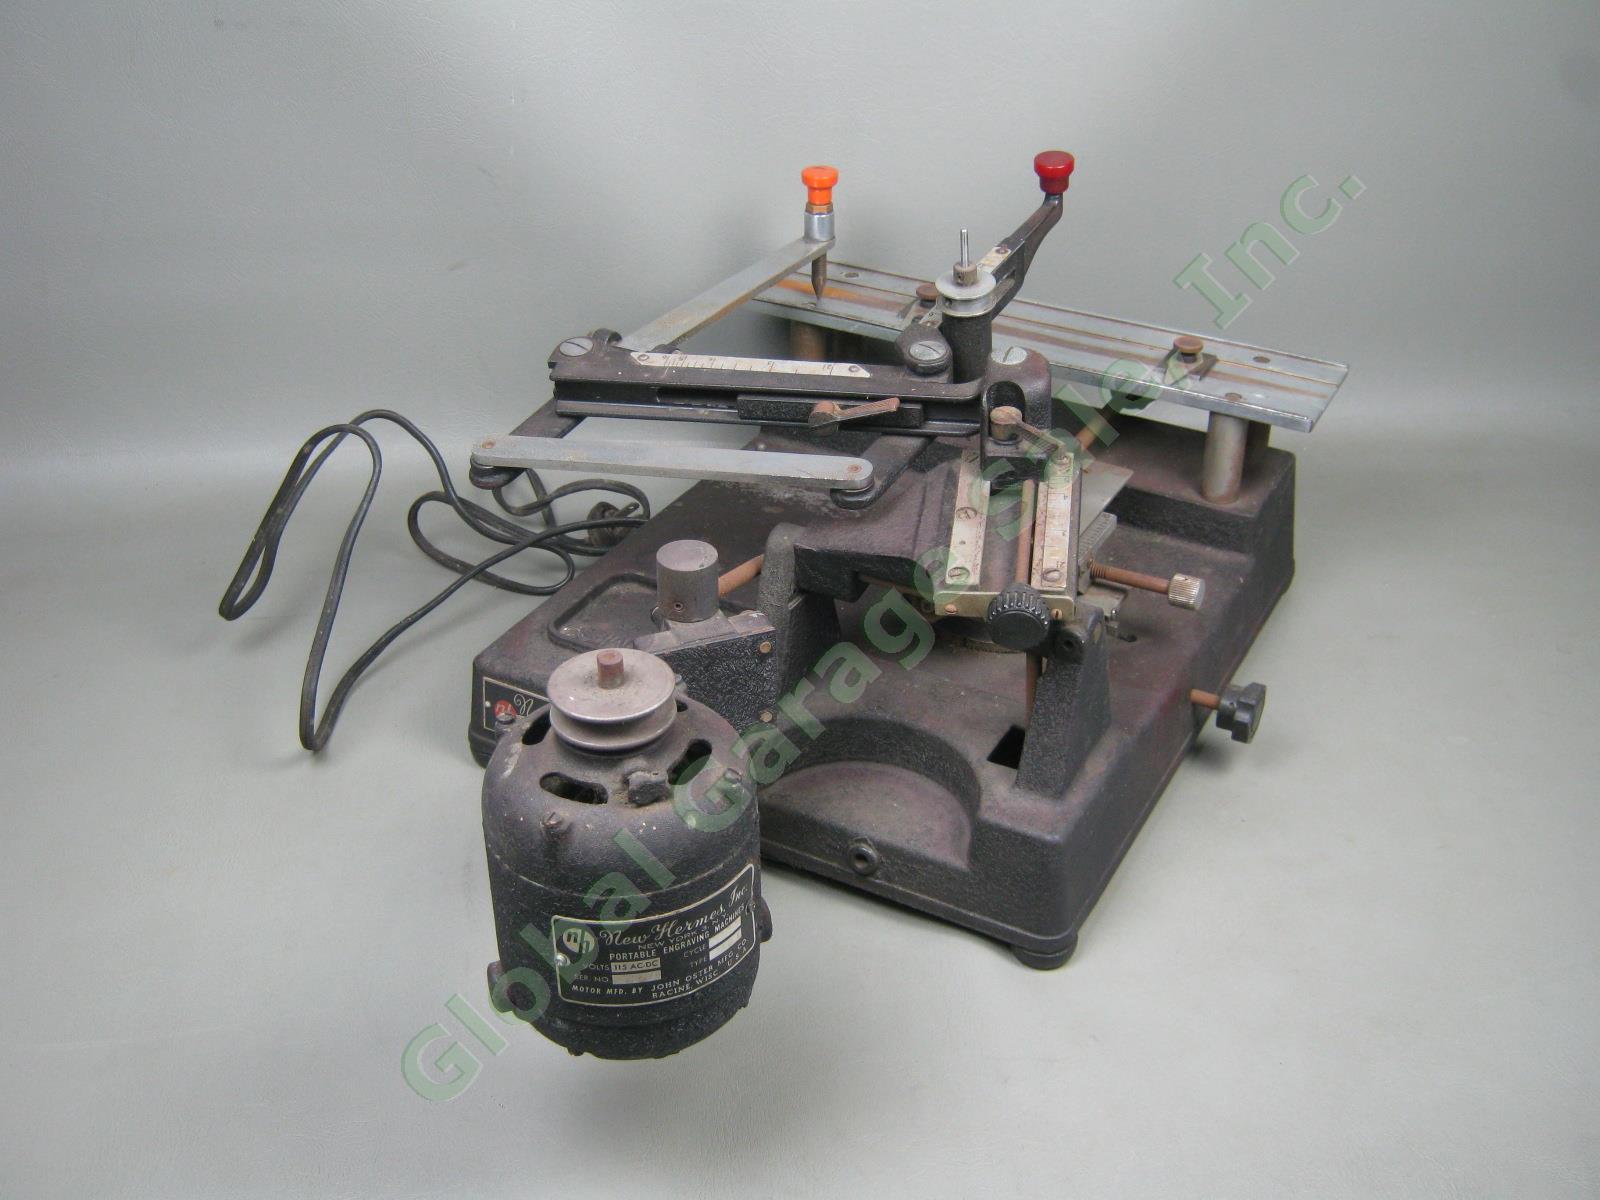 Vtg Antique New Hermes Portable IND EM Engraving Machine + Tools Accessories Lot